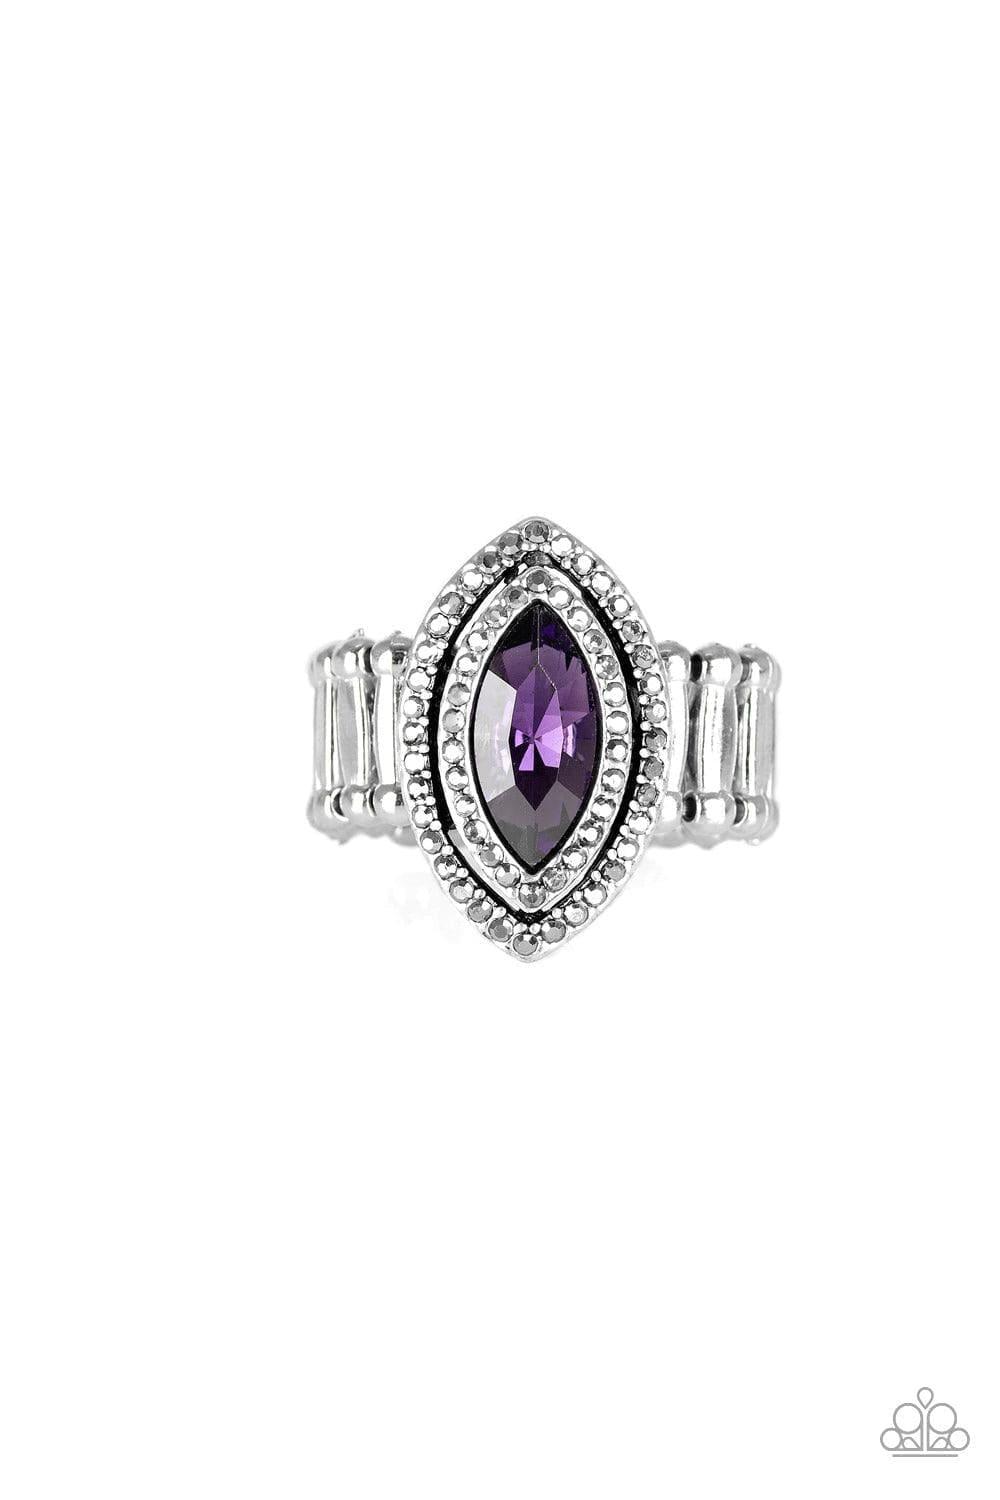 Paparazzi Accessories - Modern Millionaire - Purple Ring - Bling by JessieK